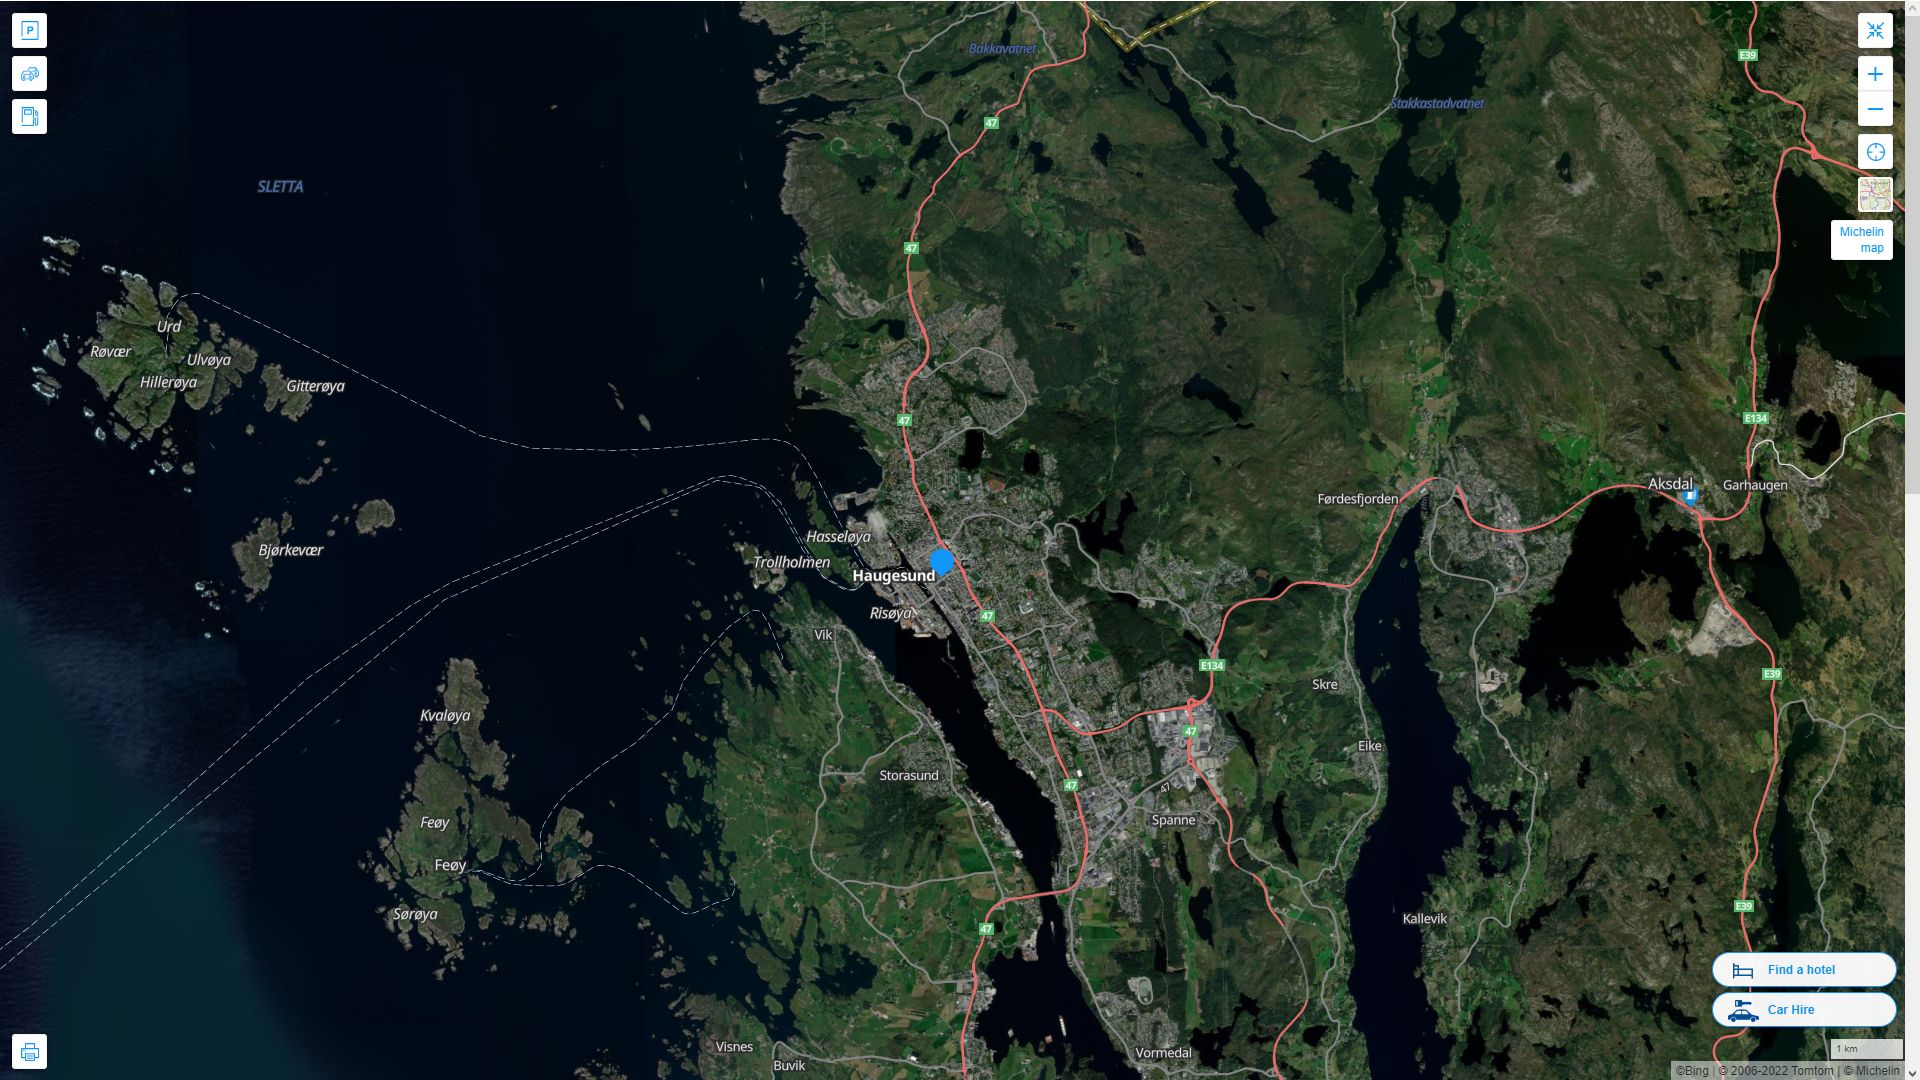 Haugesund Highway and Road Map with Satellite View